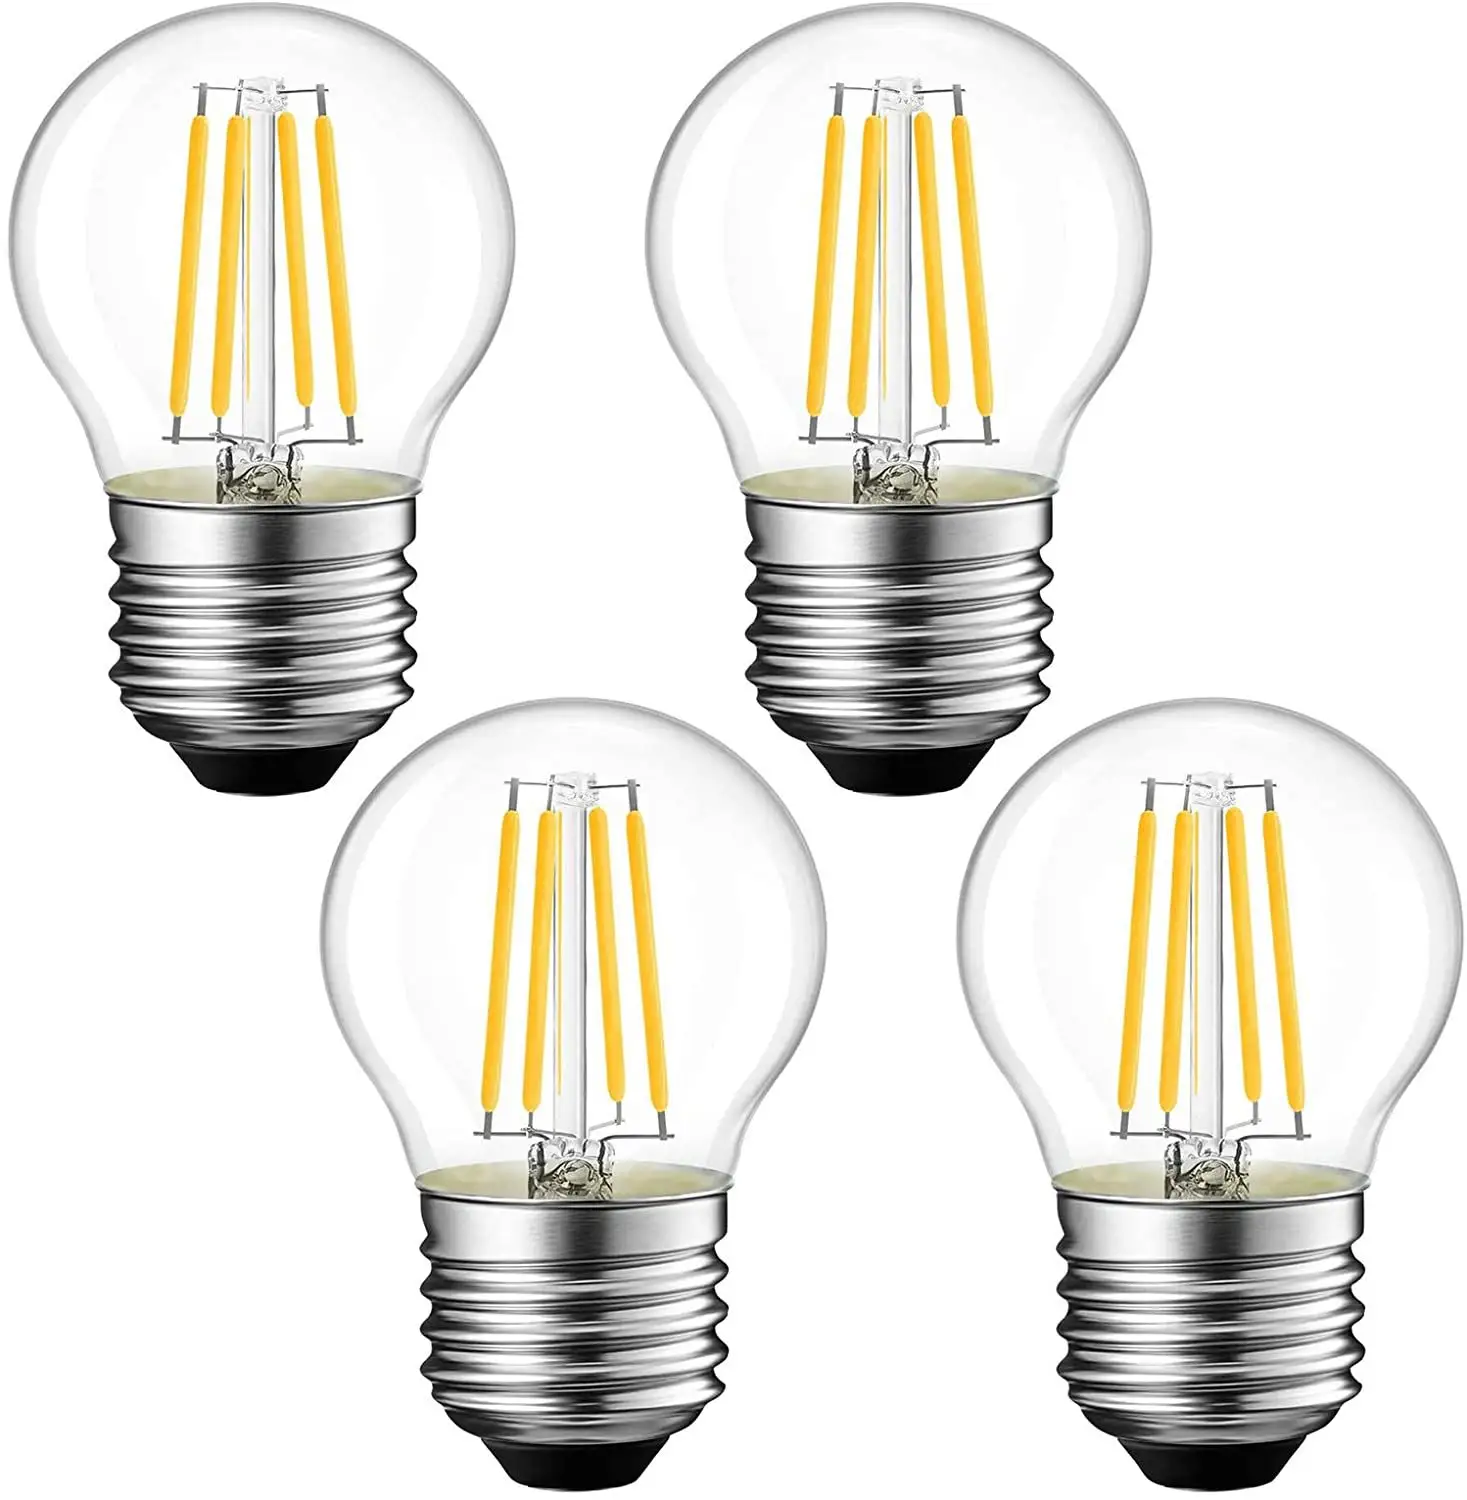 Dimbare Edison Retro Lamp G45 Led 2W 4W 6W Gloeidraad Gloeilamp E27 E26 220V 110V Glas Vintage Stijl Led Lamp